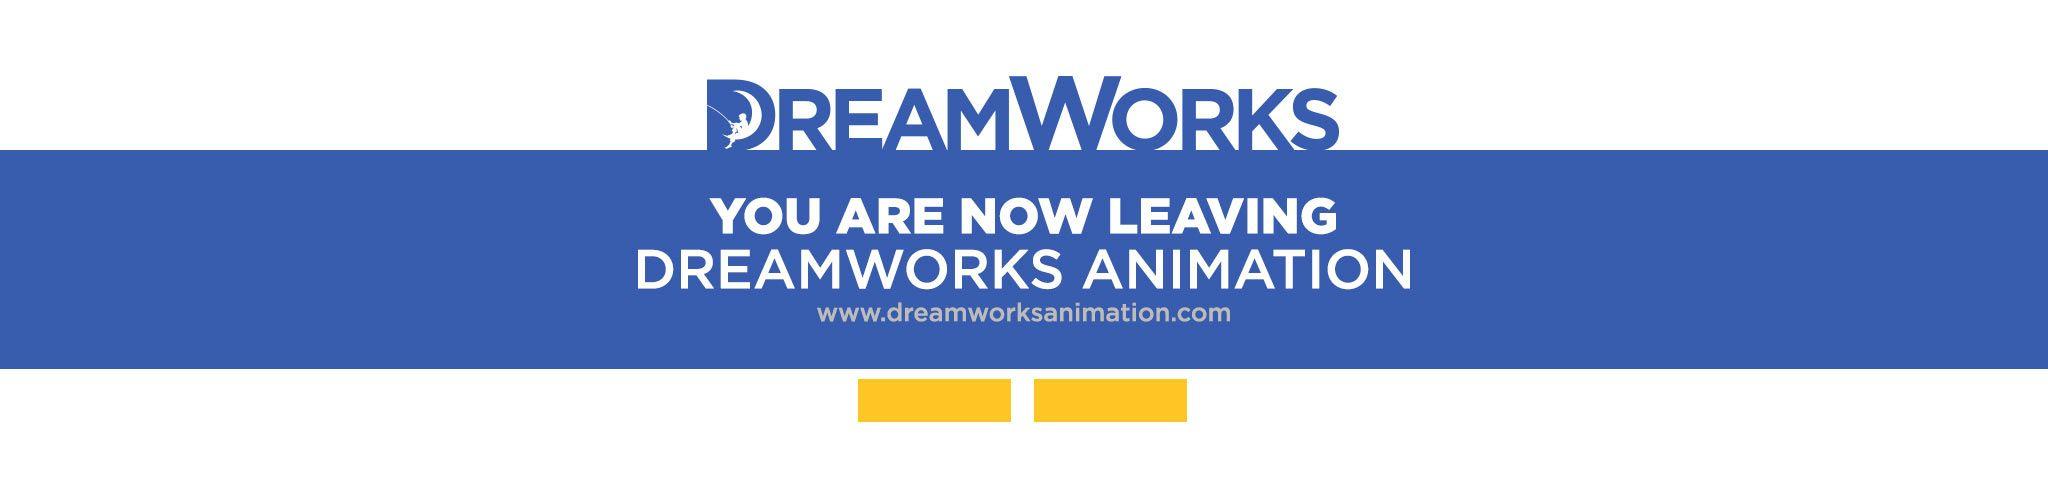 New DreamWorks Logo - DreamWorks Animation